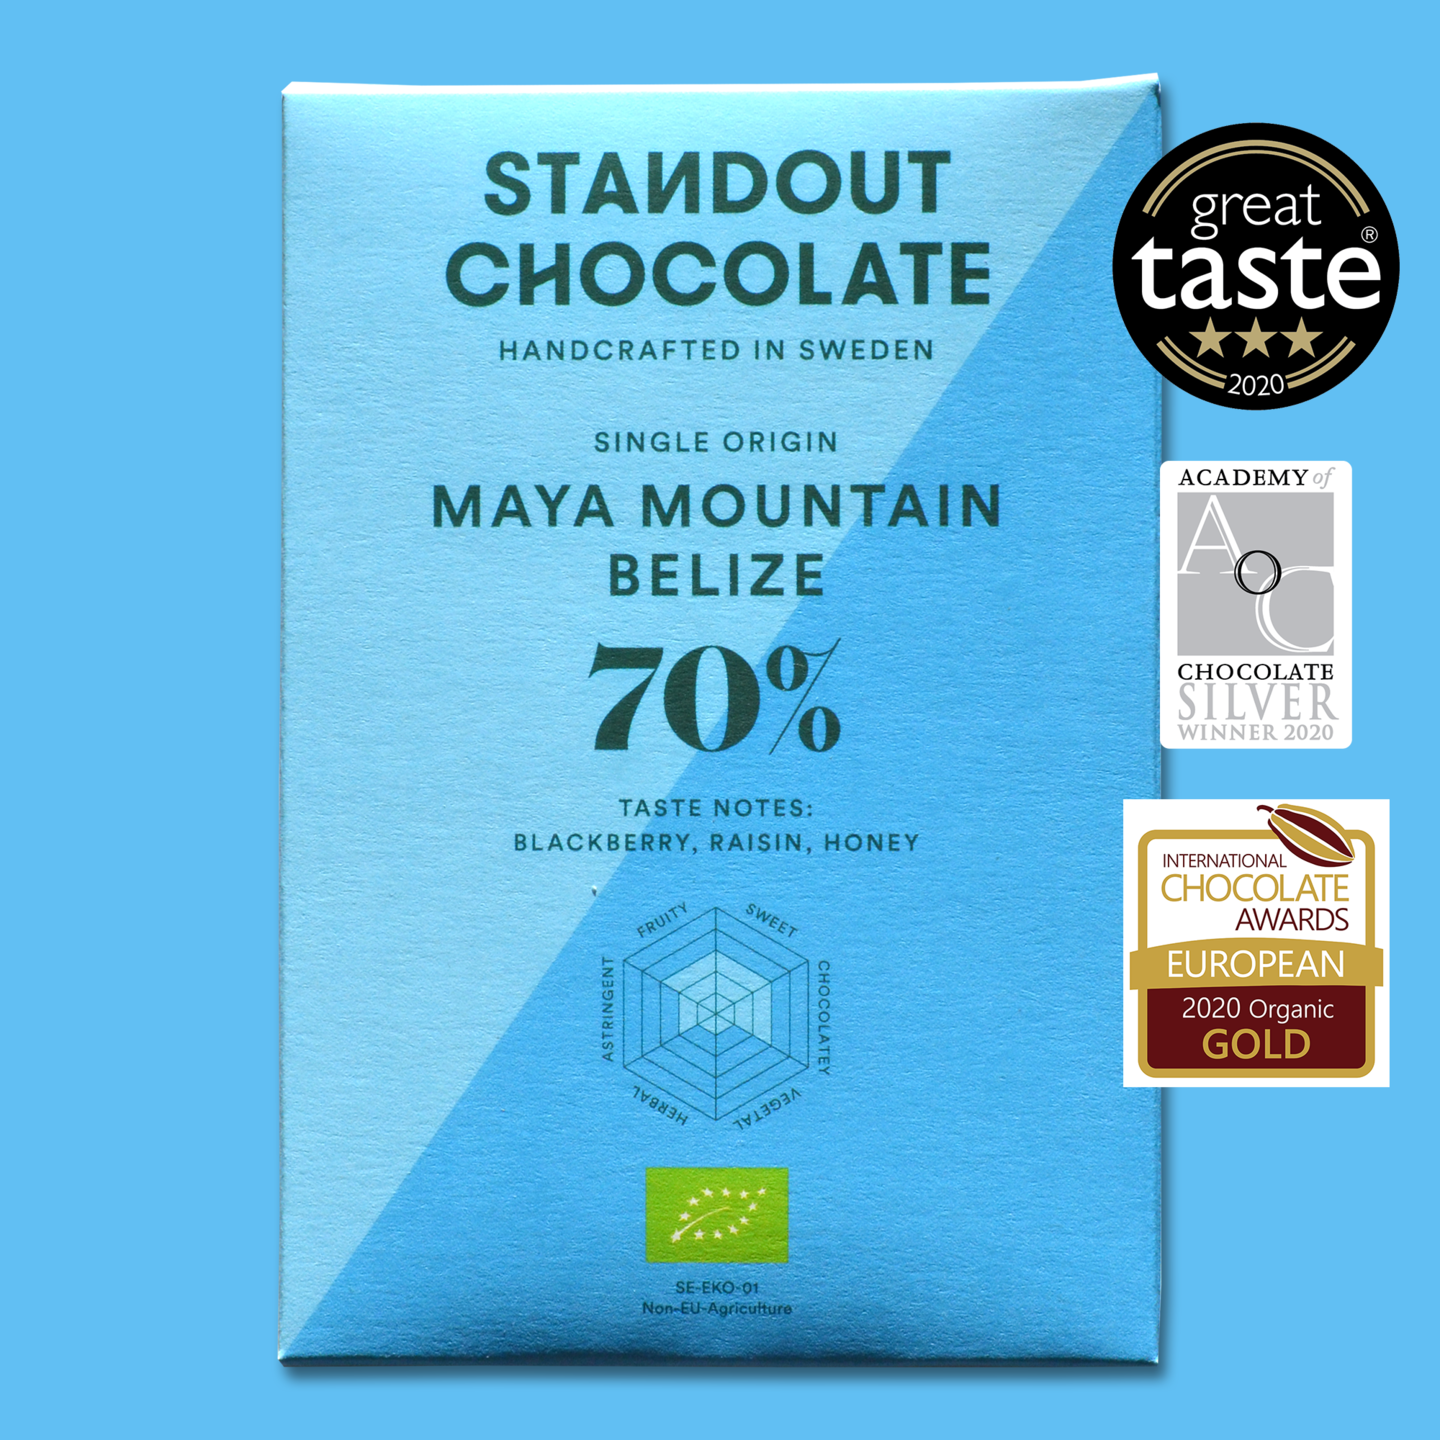 STANDOUT CHOCOLATE | Dunkle Schokolade »Maya Mountain Belize« 70% | 50g